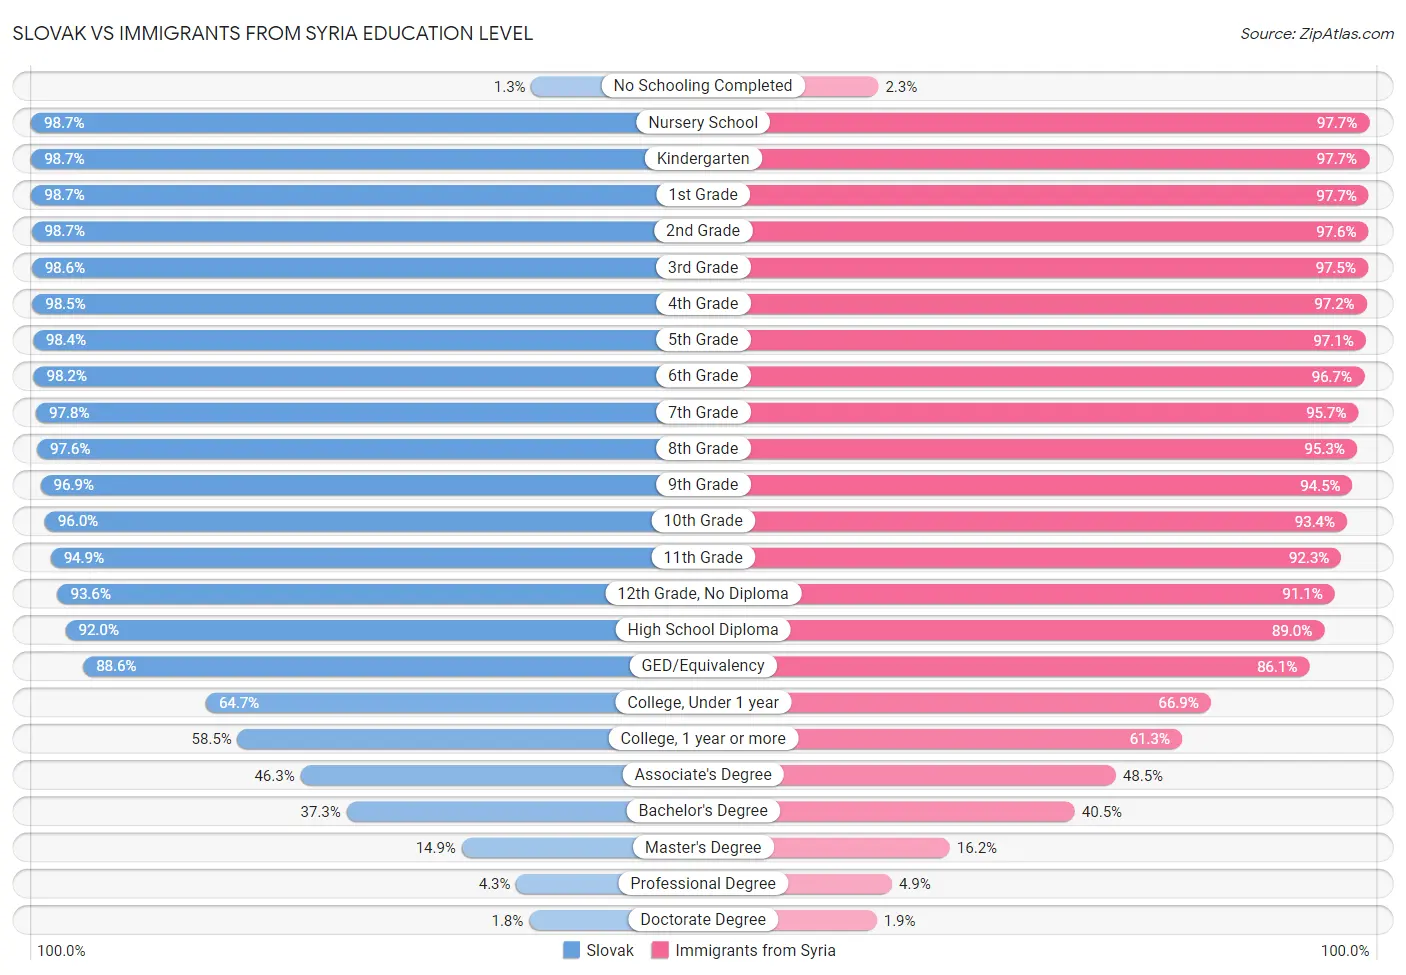 Slovak vs Immigrants from Syria Education Level